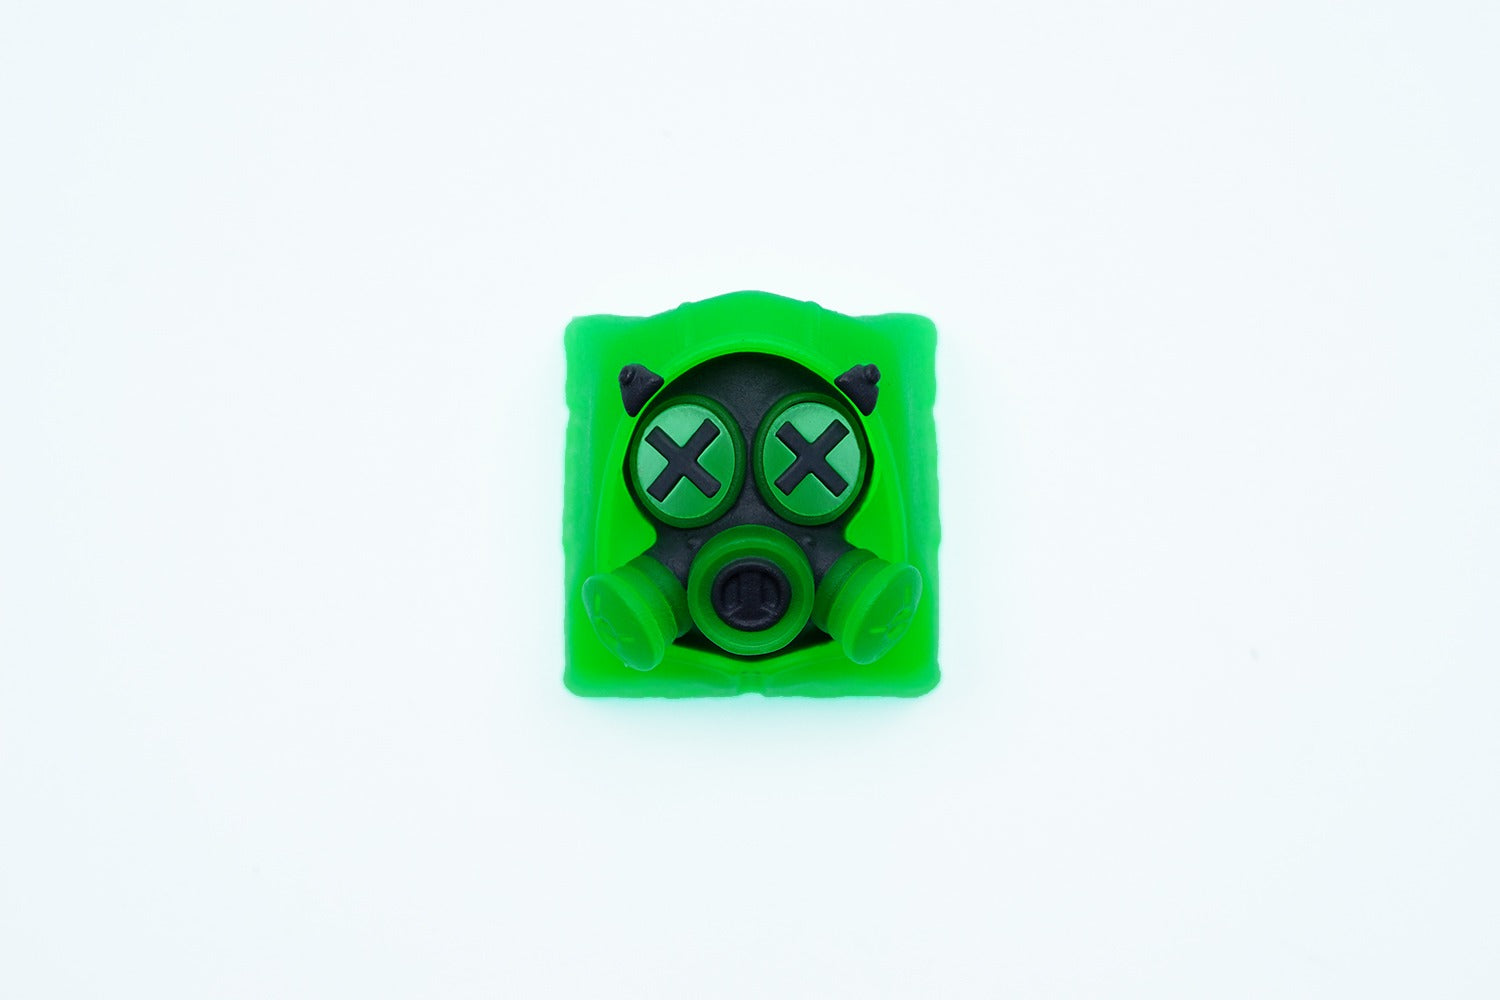 Hot Keys Project HKP Specter Crosseyes Green Poison Artisan Keycap MKQCZQ1LVO |0|